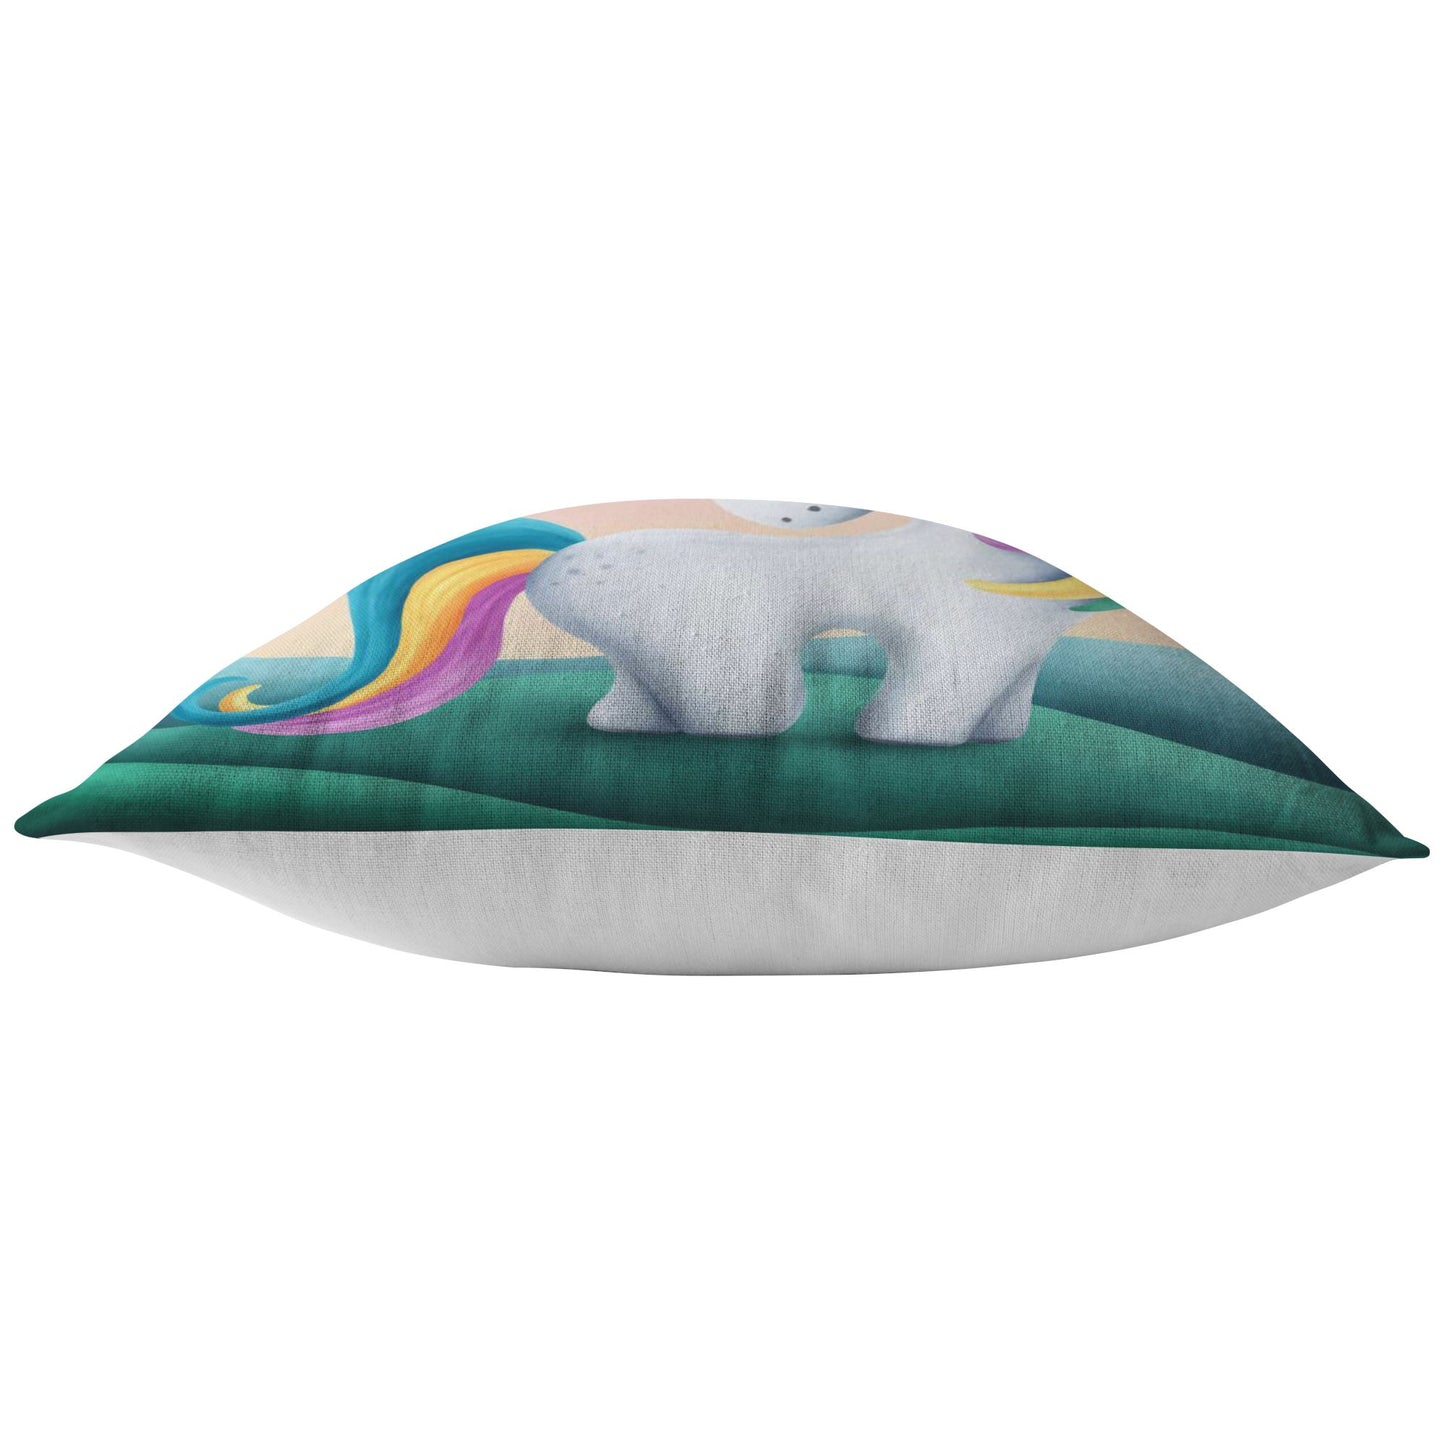 Unique Unicorn Throw Pillow Perfect Home Decor